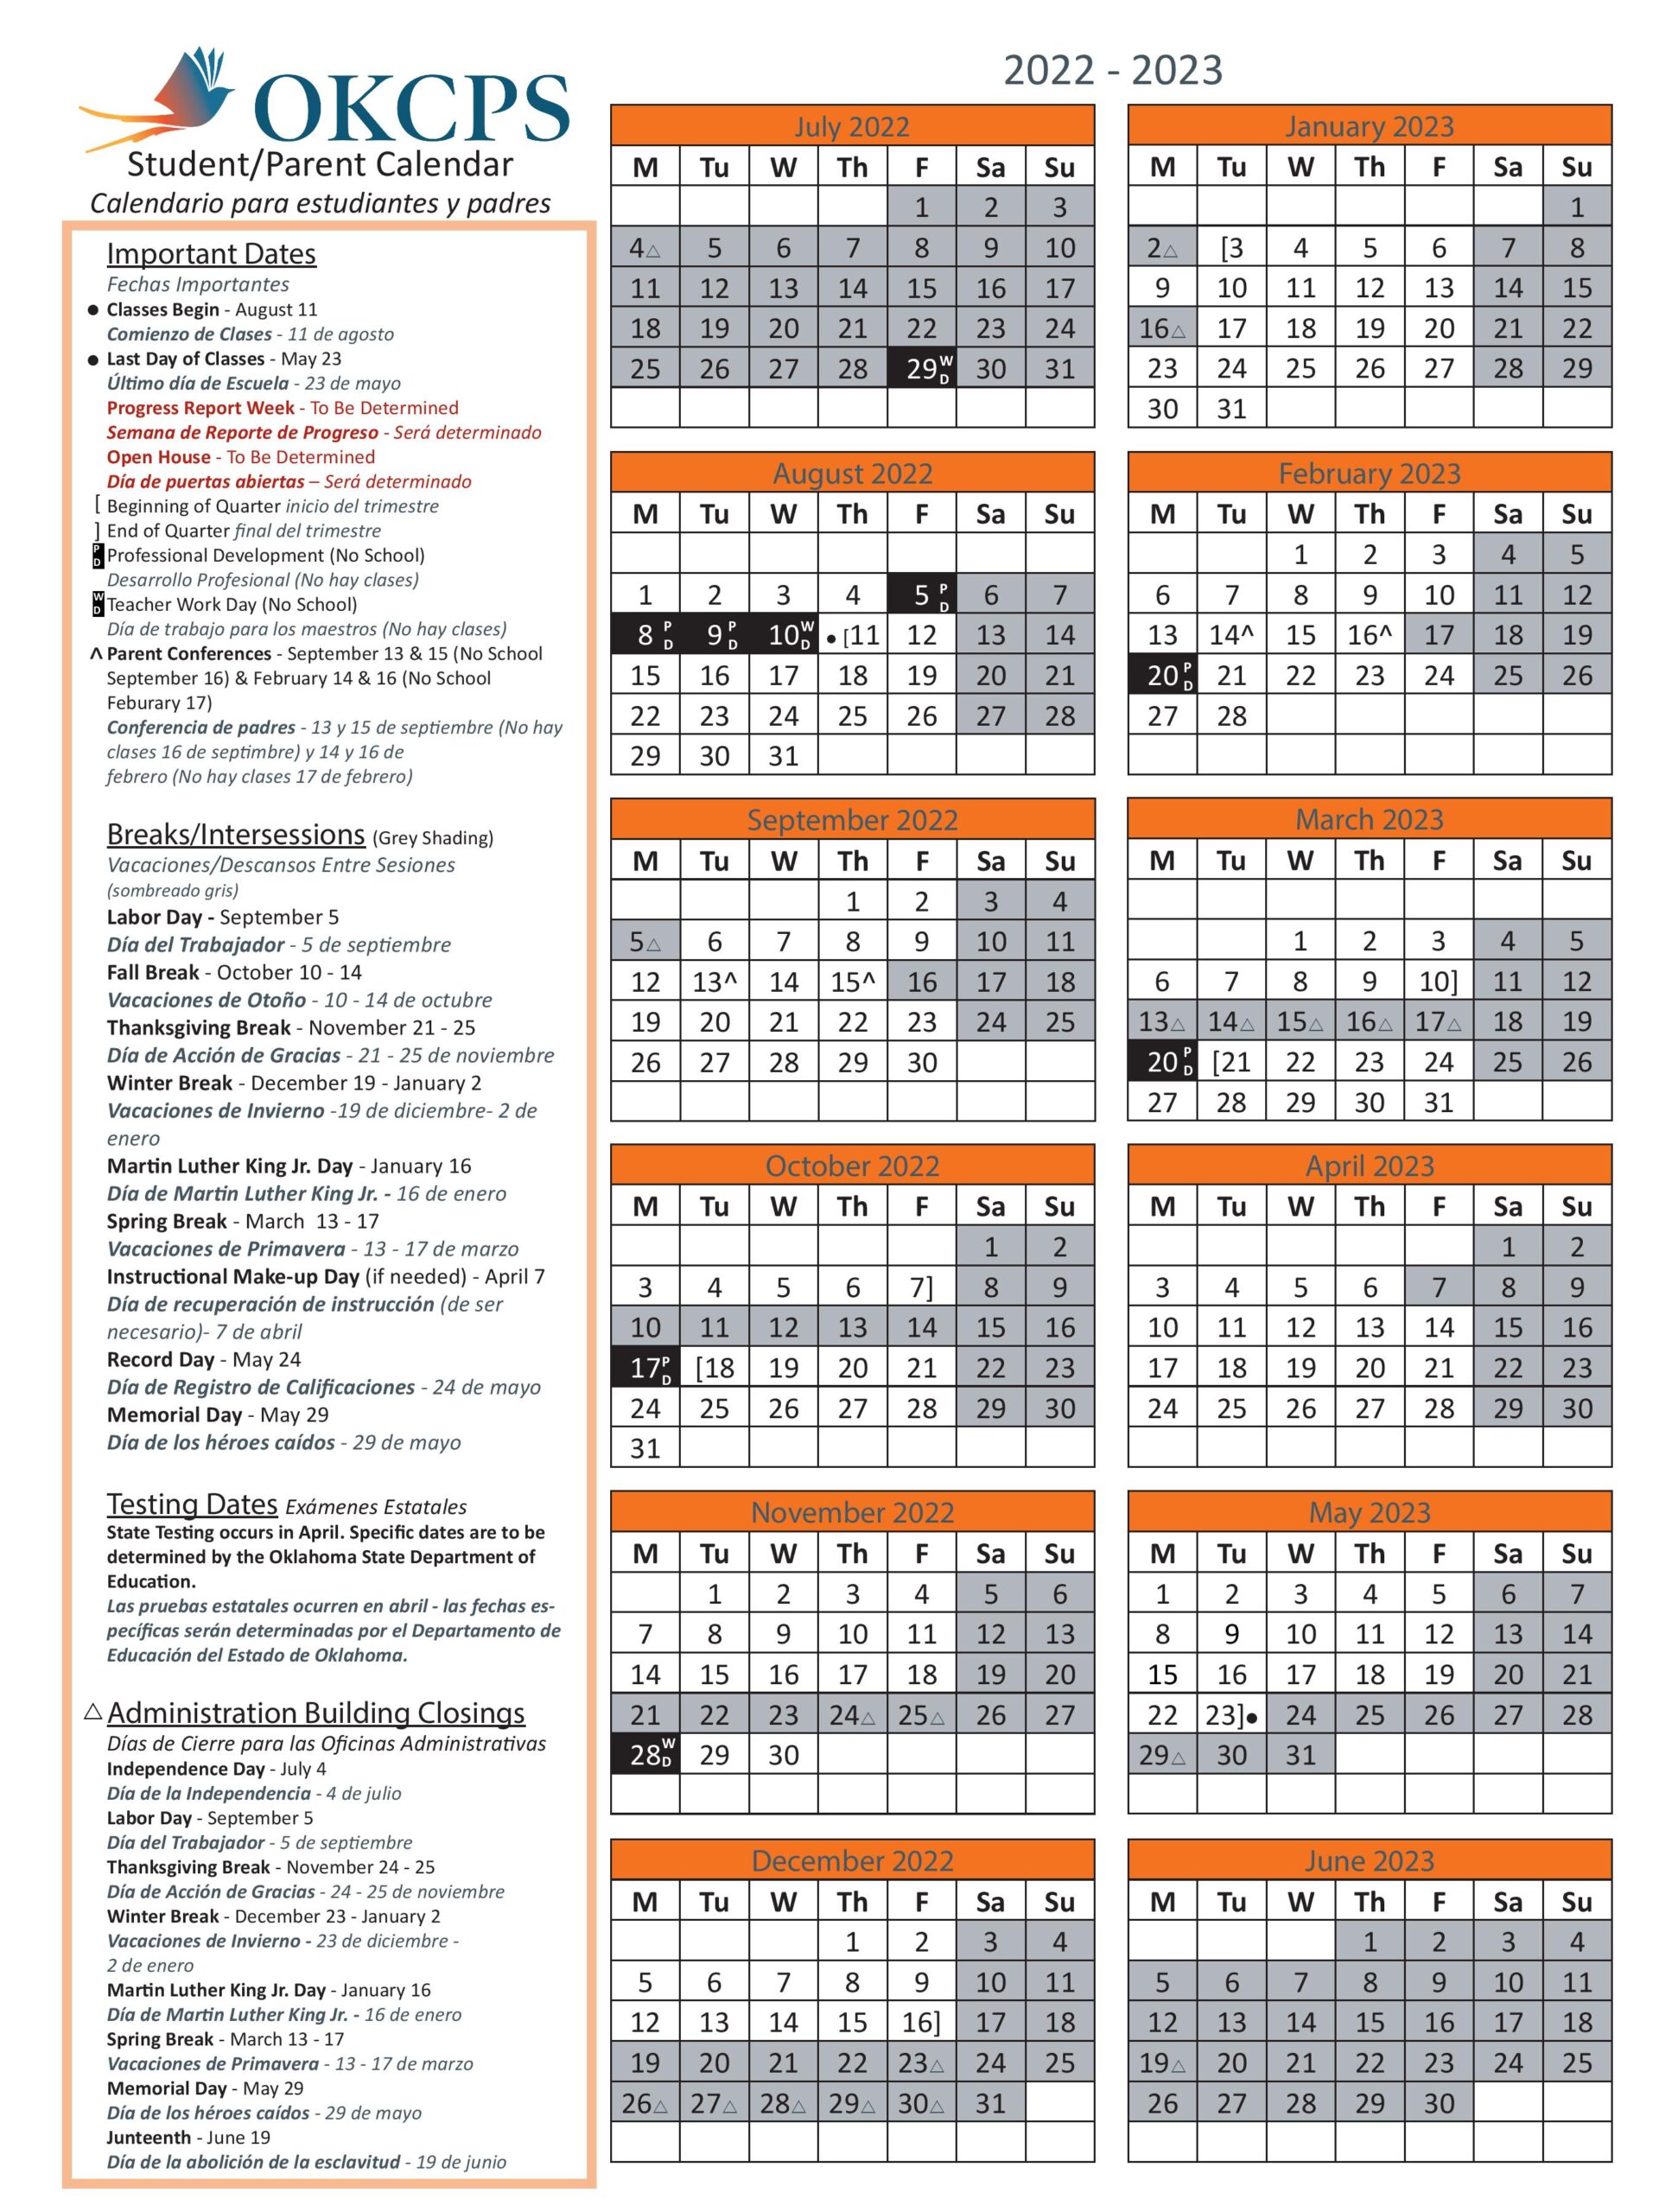 oklahoma-city-public-schools-calendar-holidays-2022-2023-pdf